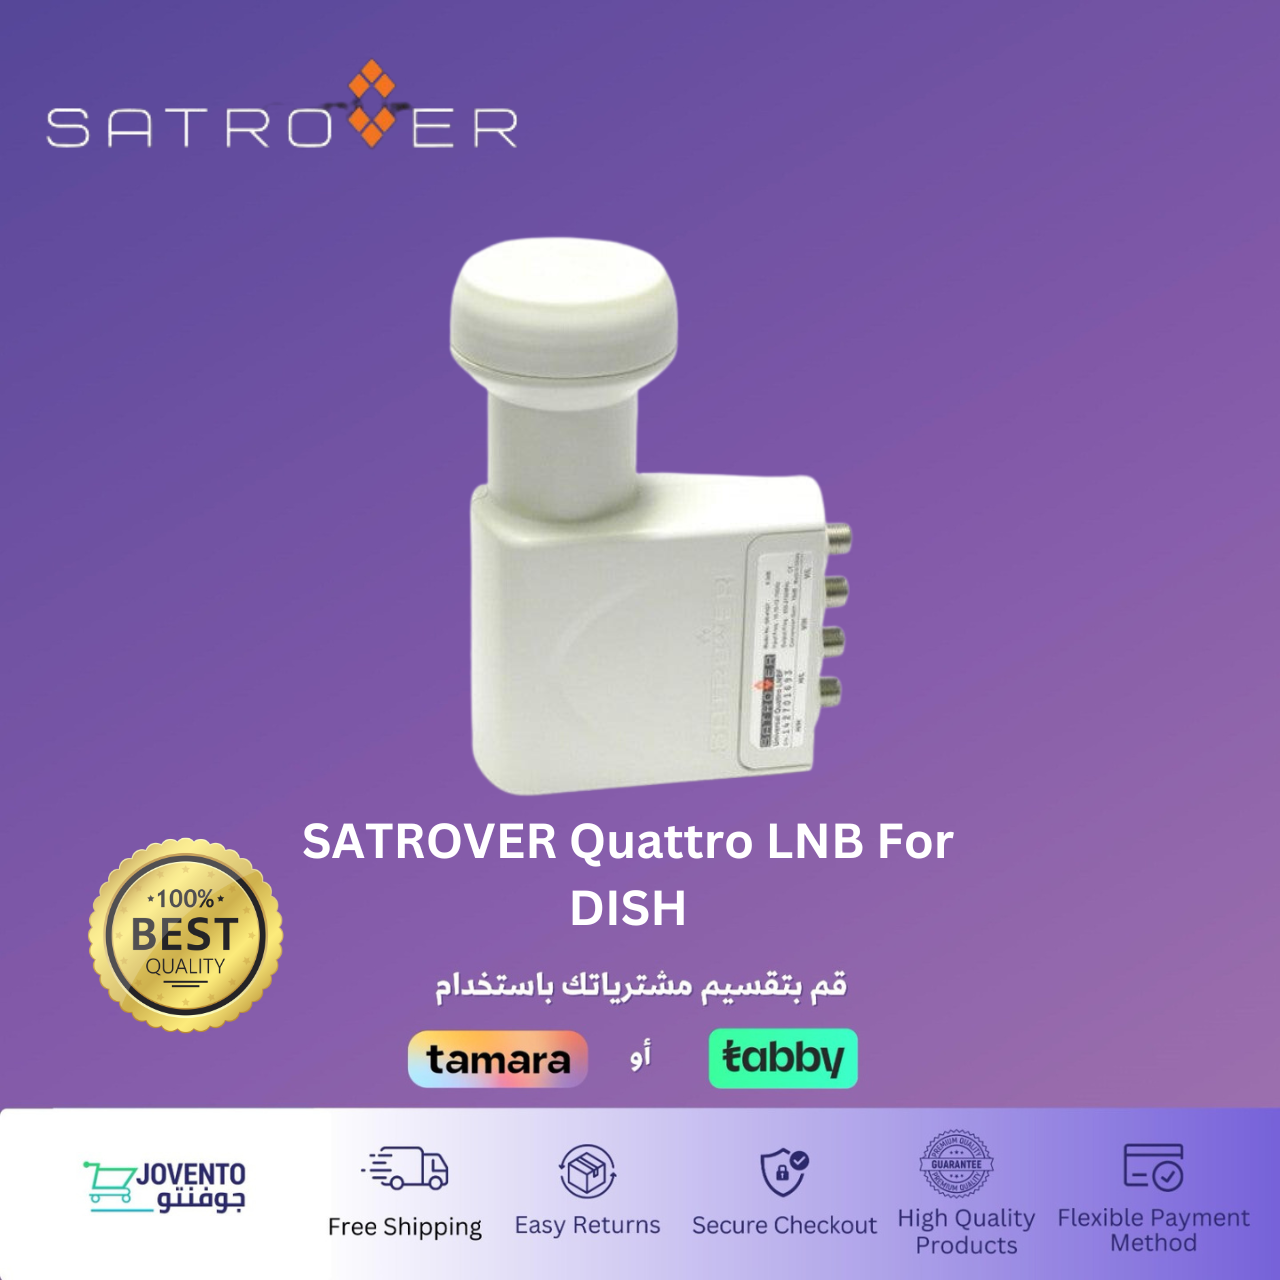 SATROVER Quattro LNB For DISH